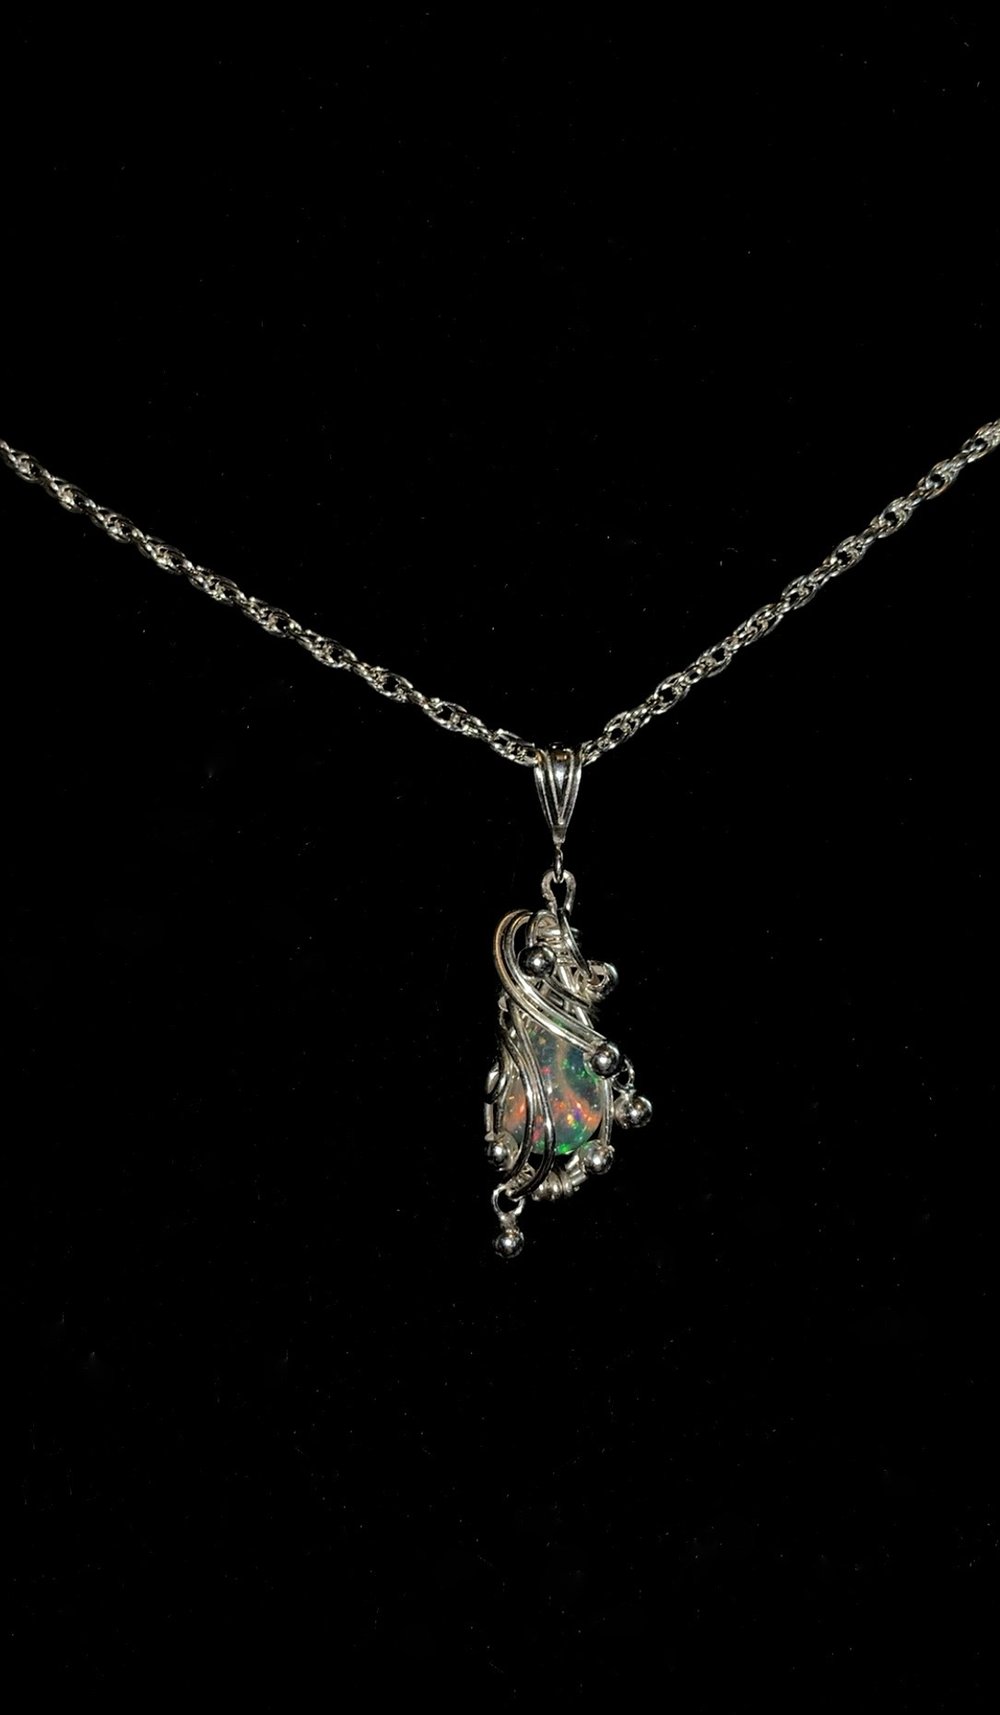 ⟢ Persephone necklace ⟣